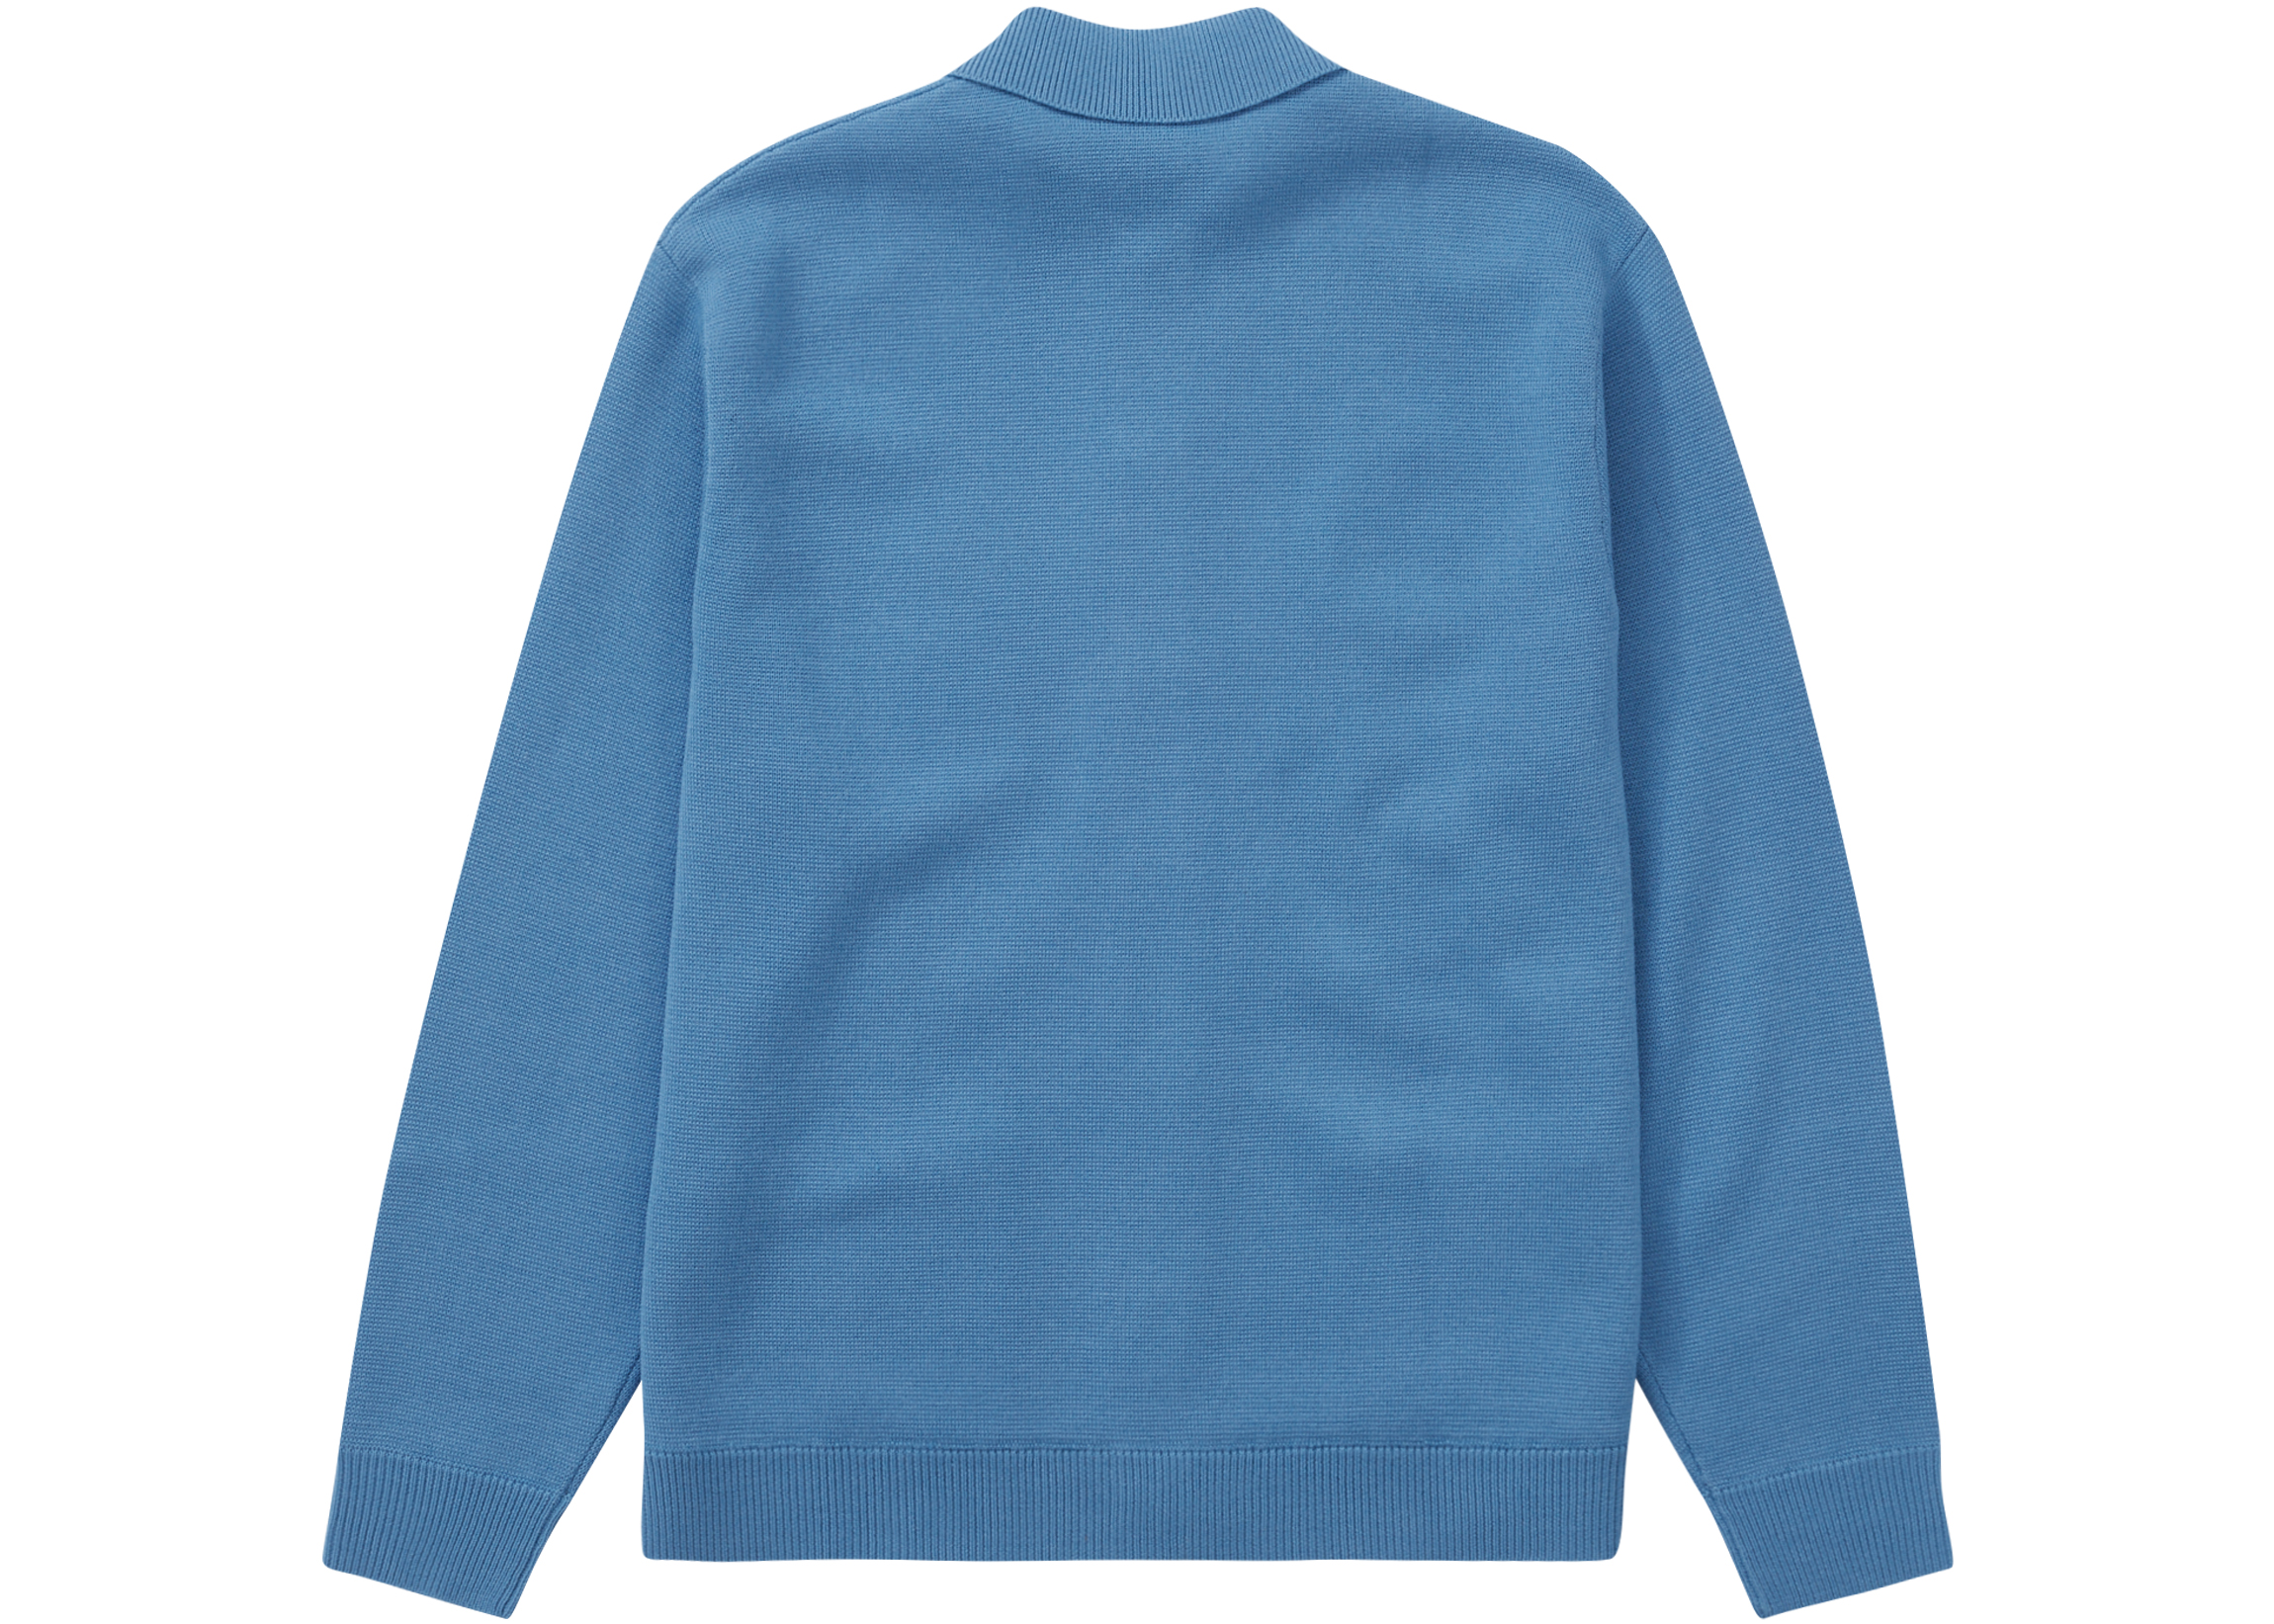 Supreme Beaded Applique Cardigan Bright Blue